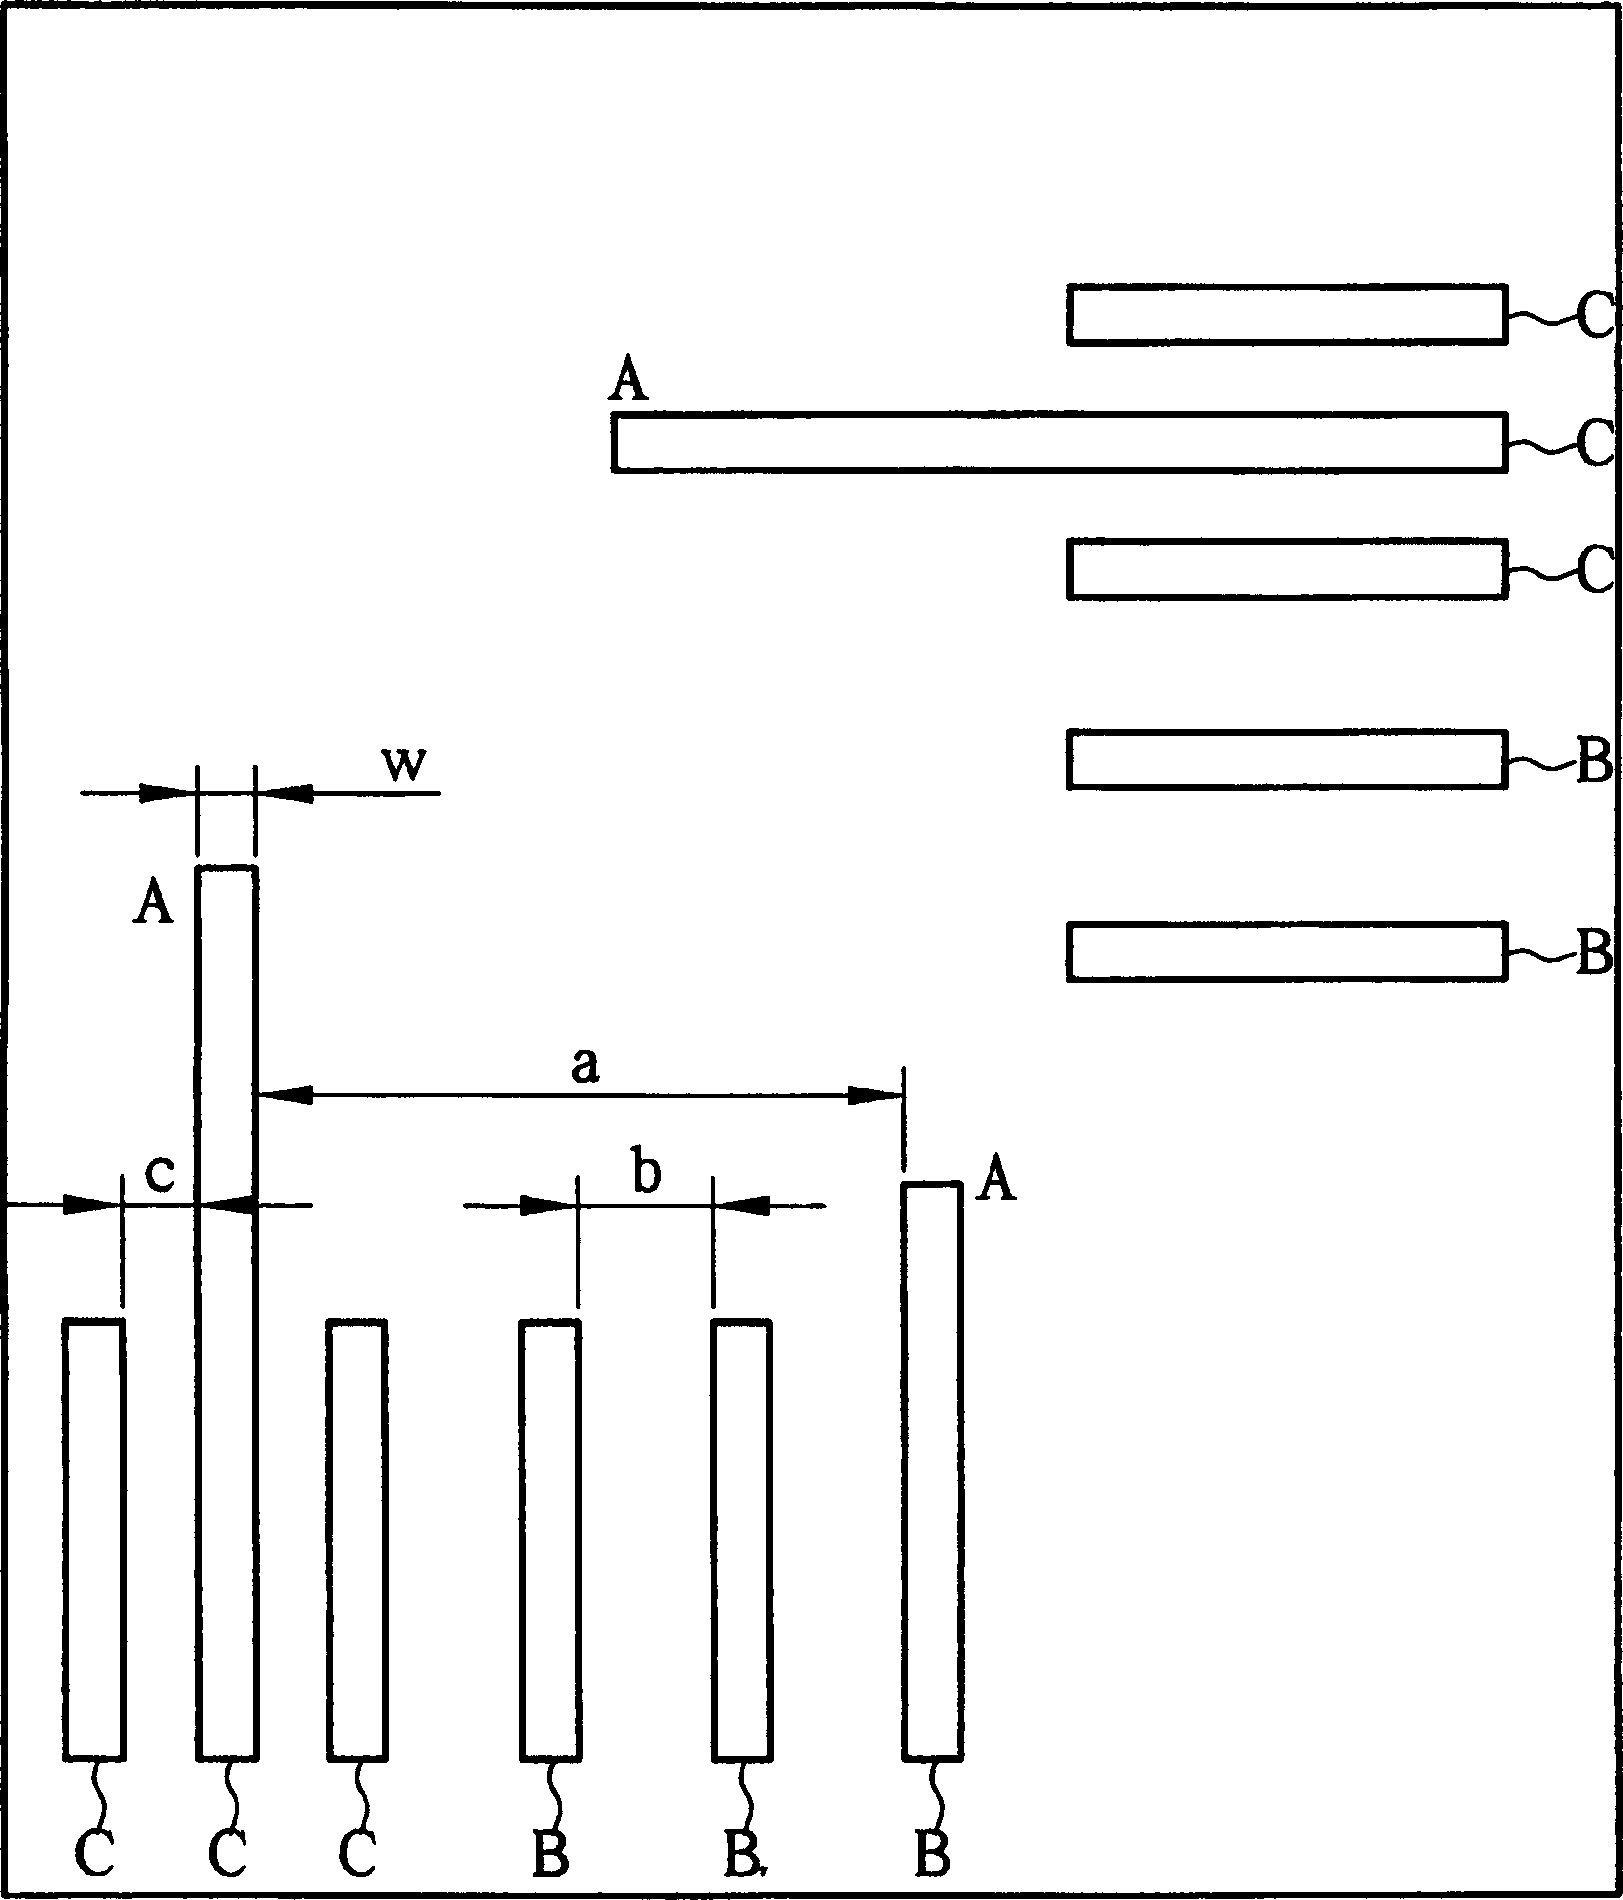 Method for correcting mask distribution pattern